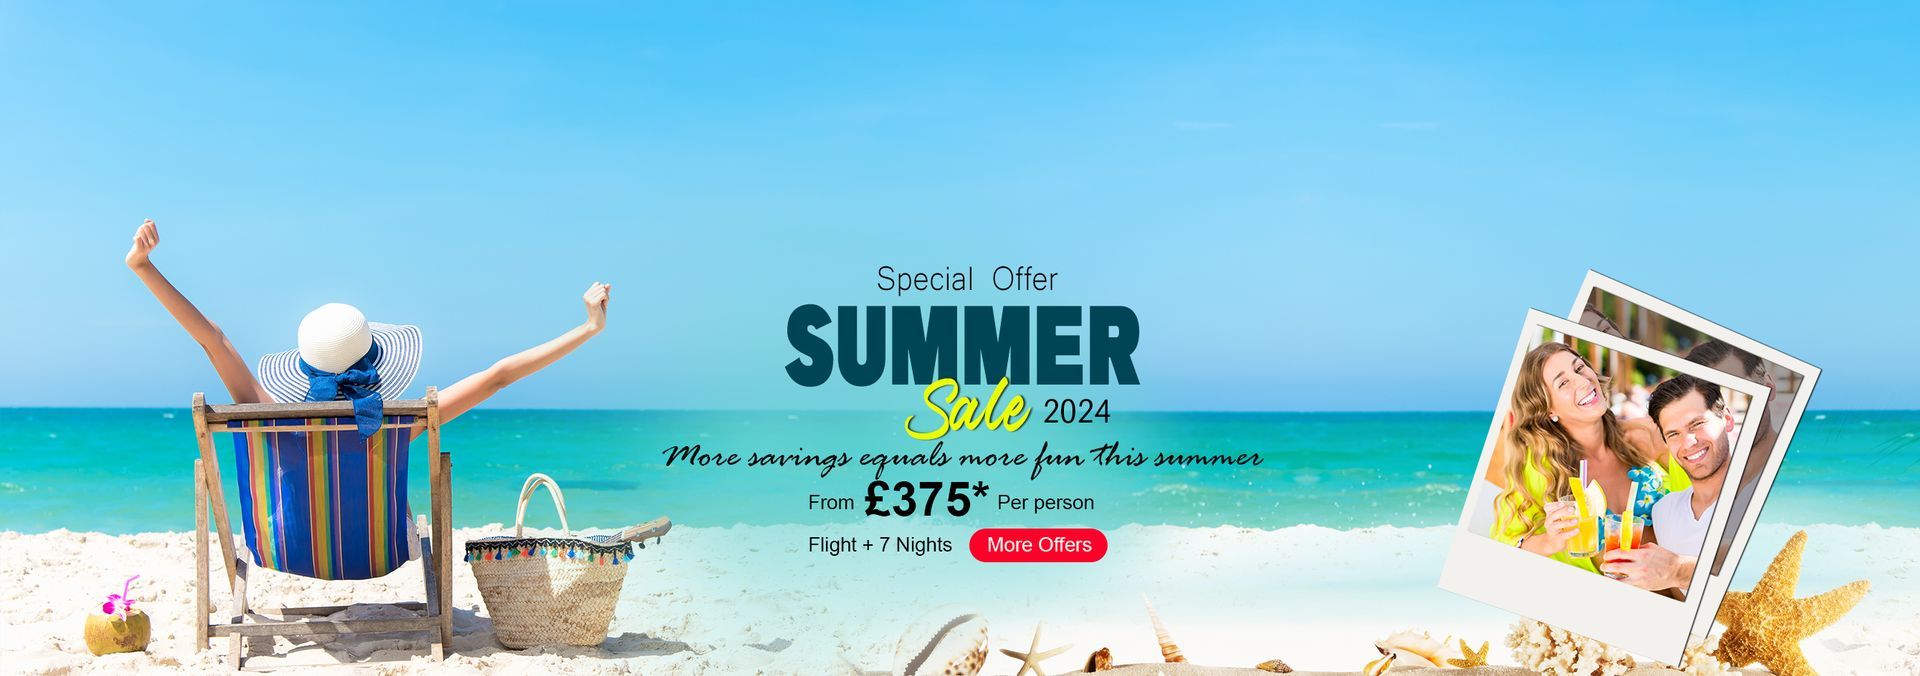 Special Offer Summer Sale 2024